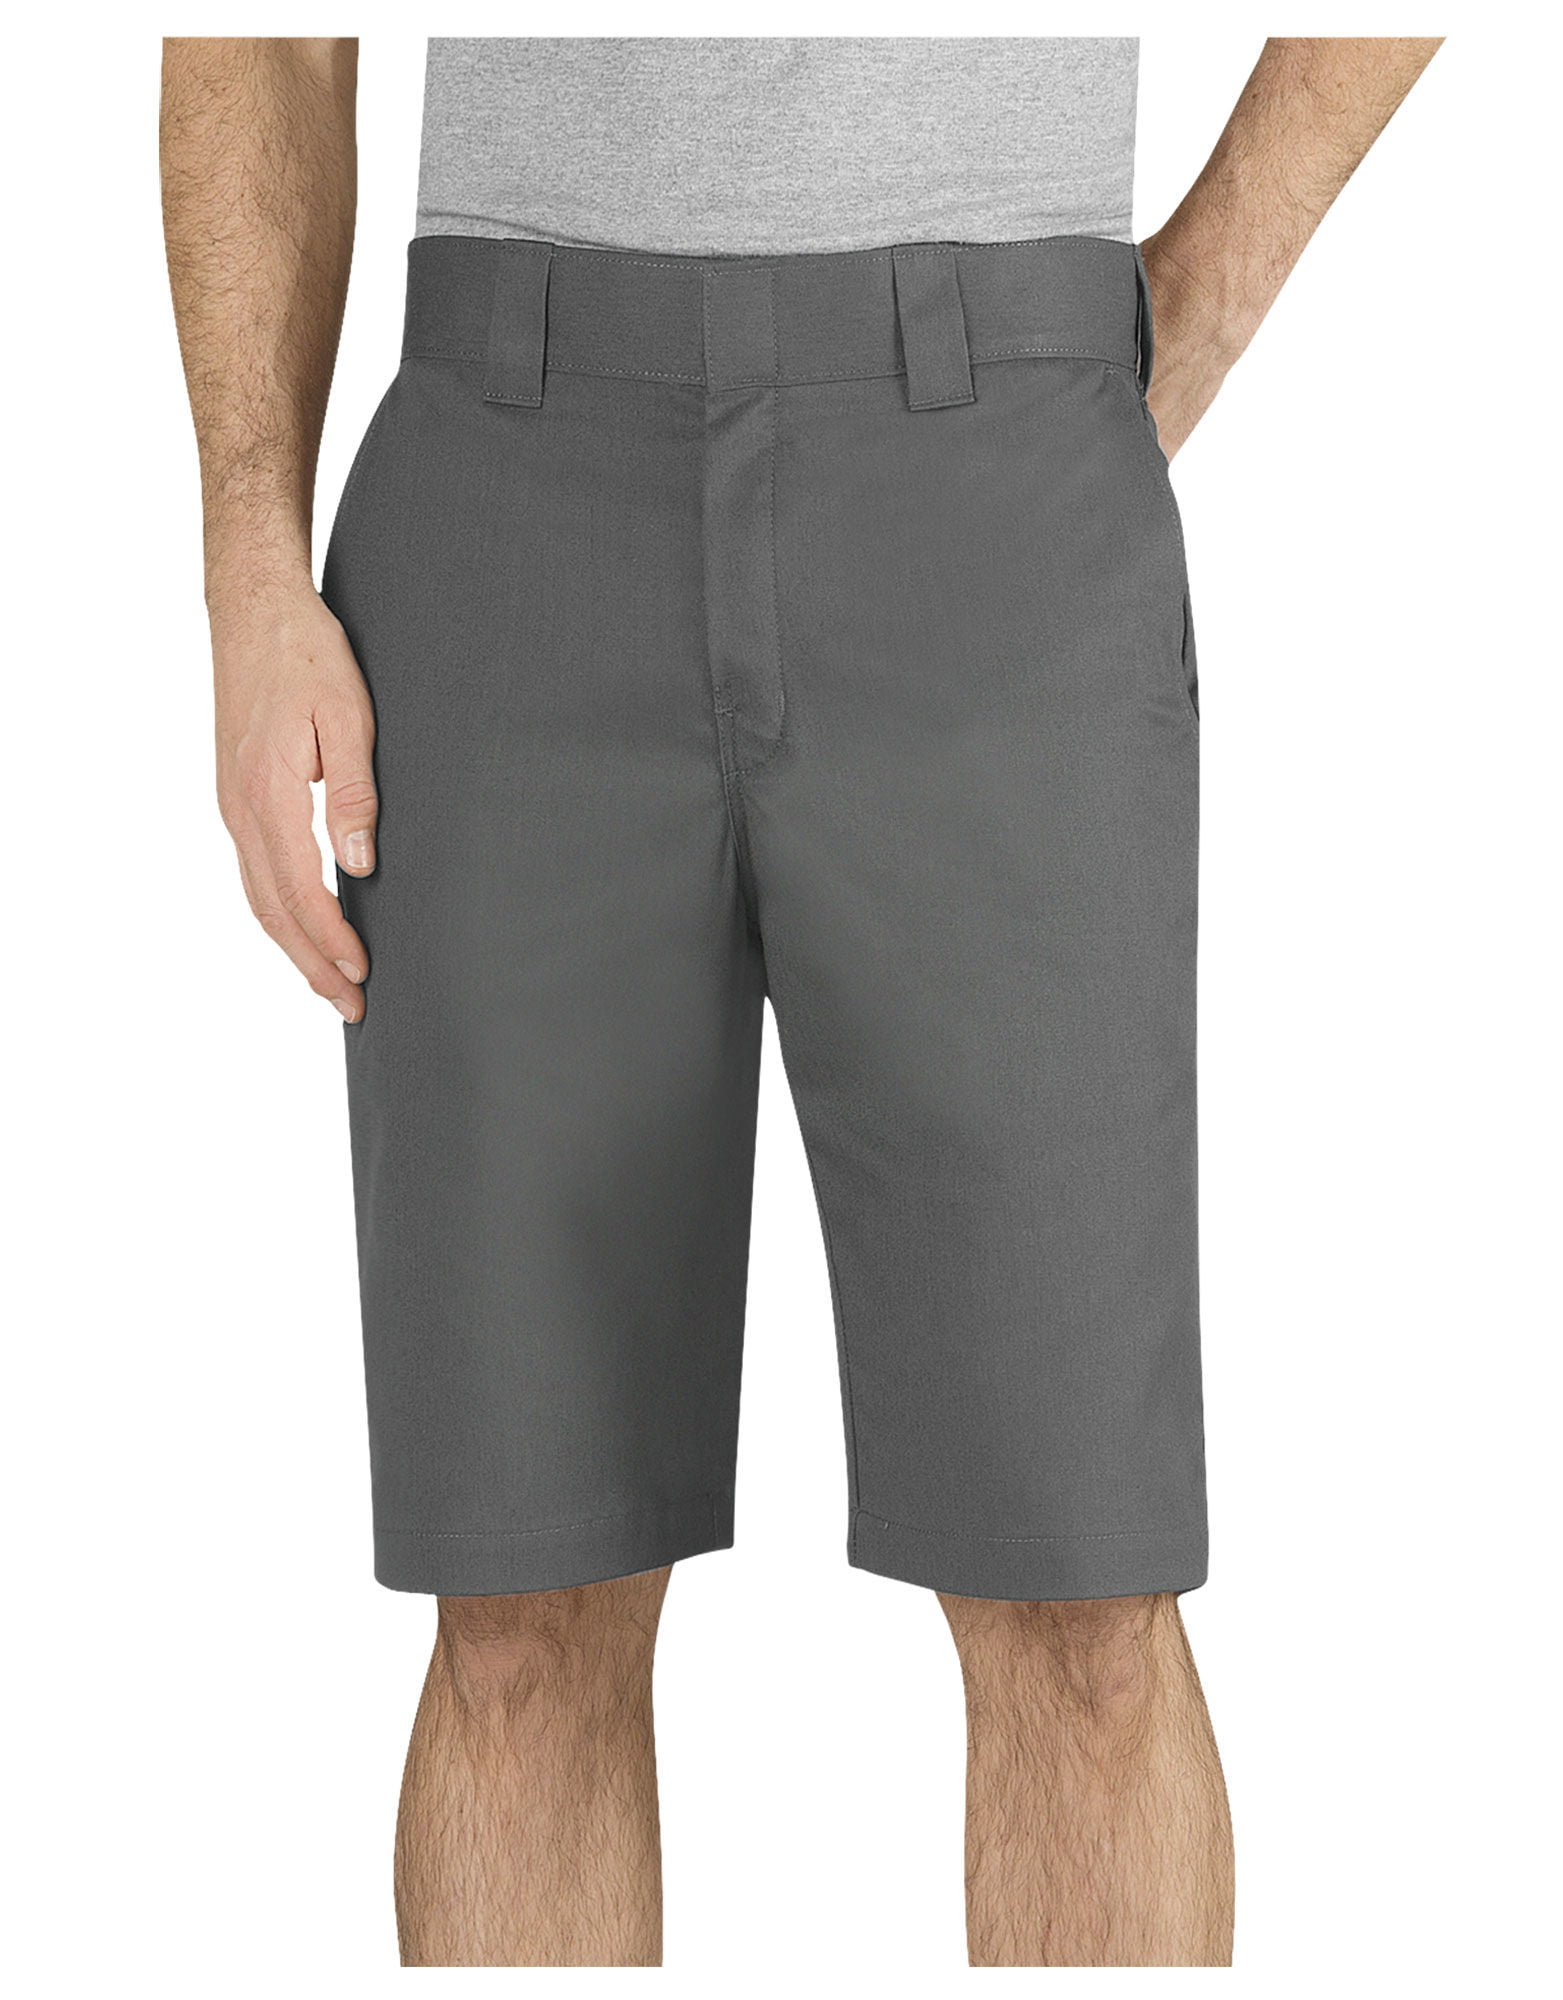 Dickies Mens FLEX 11 Regular Fit Work Shorts, 32, Gravel Gray | Walmart ...